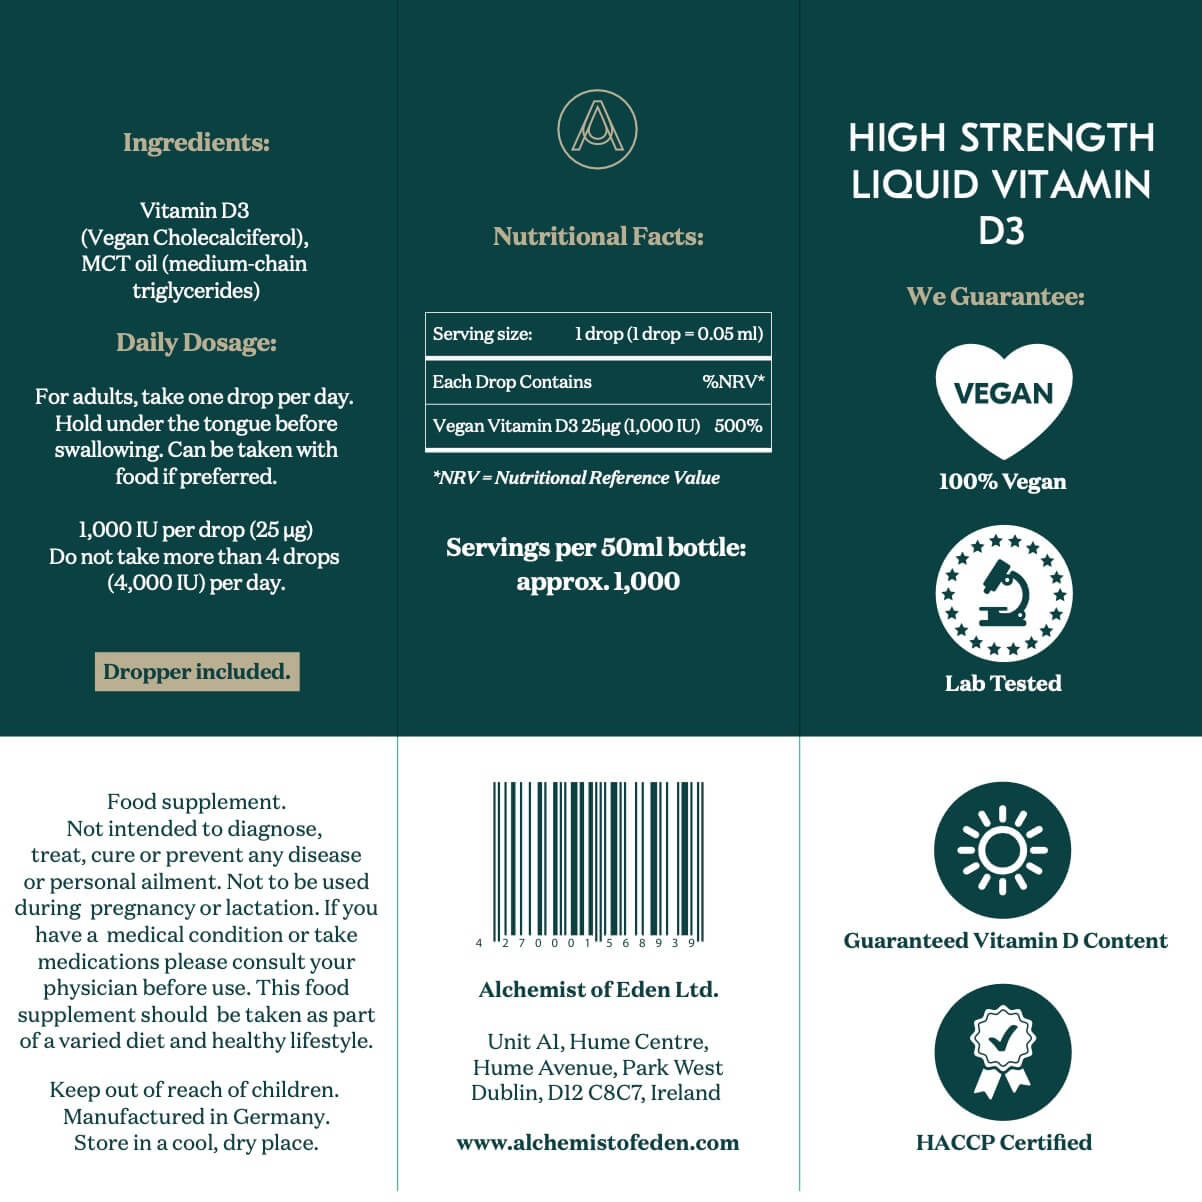 High Strength Liquid Vitamin D3